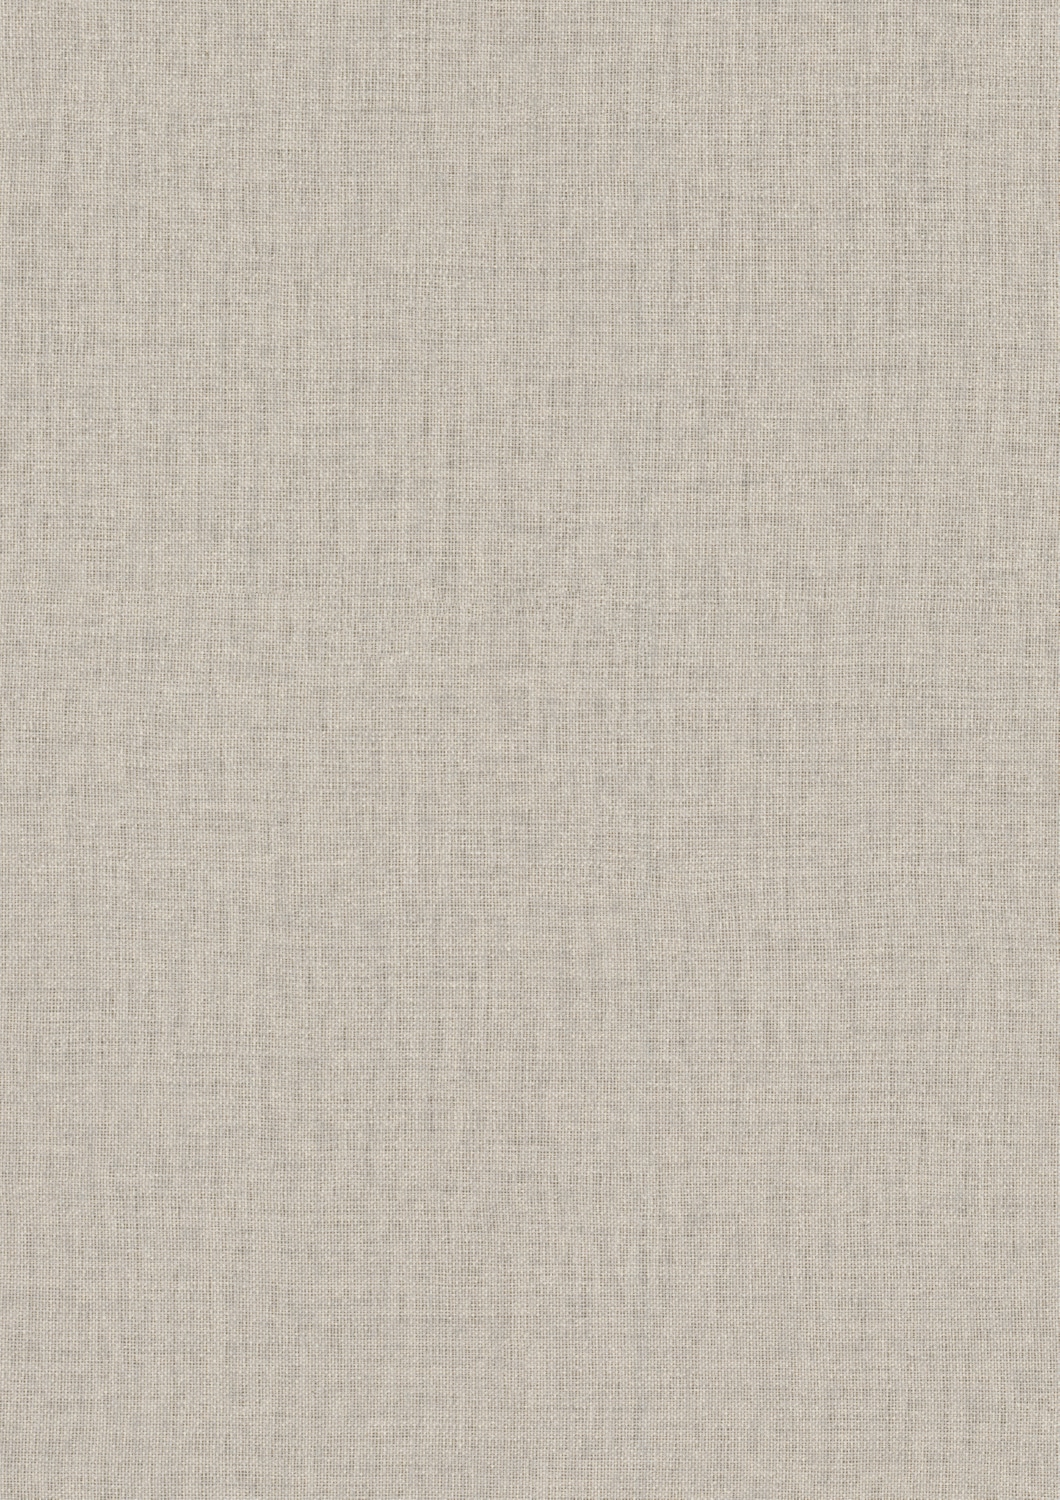 ЛДСП  Текстиль серый ST10, 2800*2070*10мм